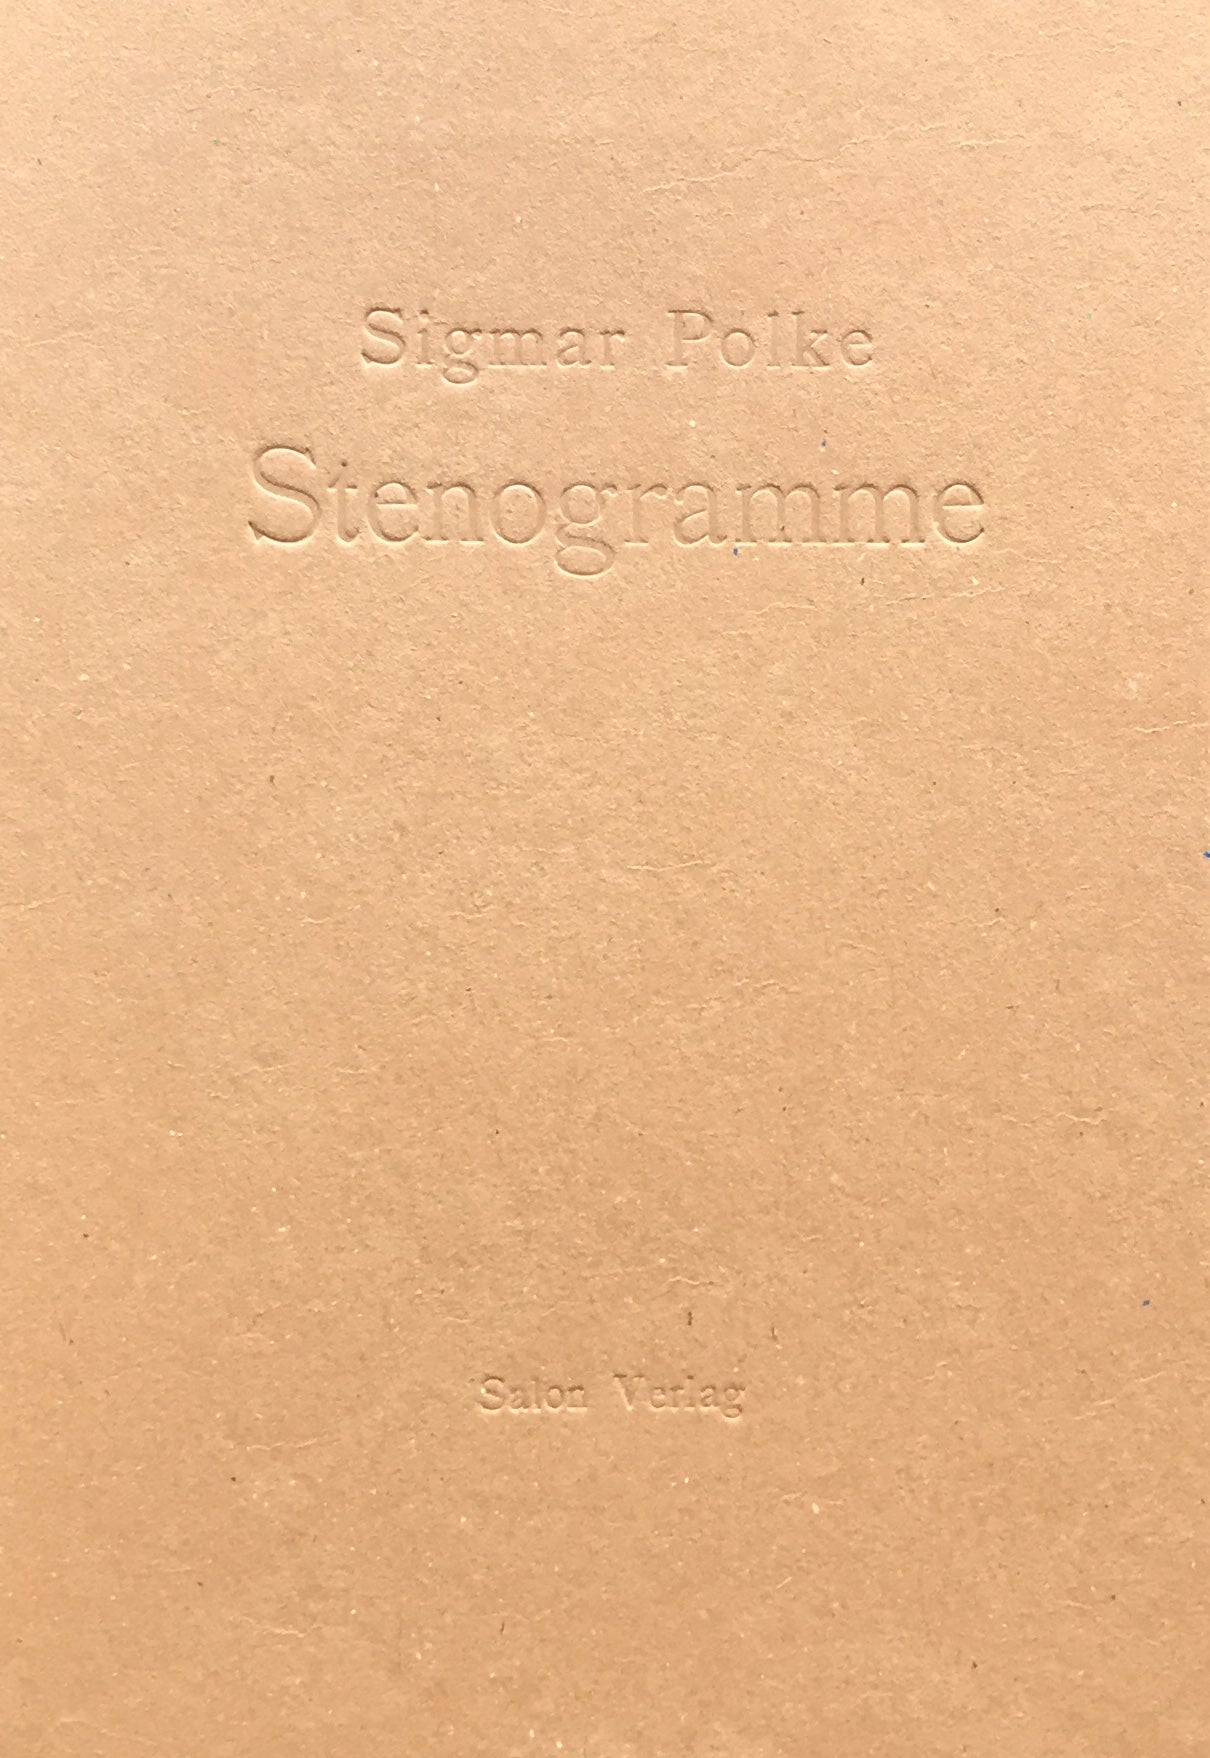 Stenogramme　Sigmar polke　シグマー・ポルケ　限定350部